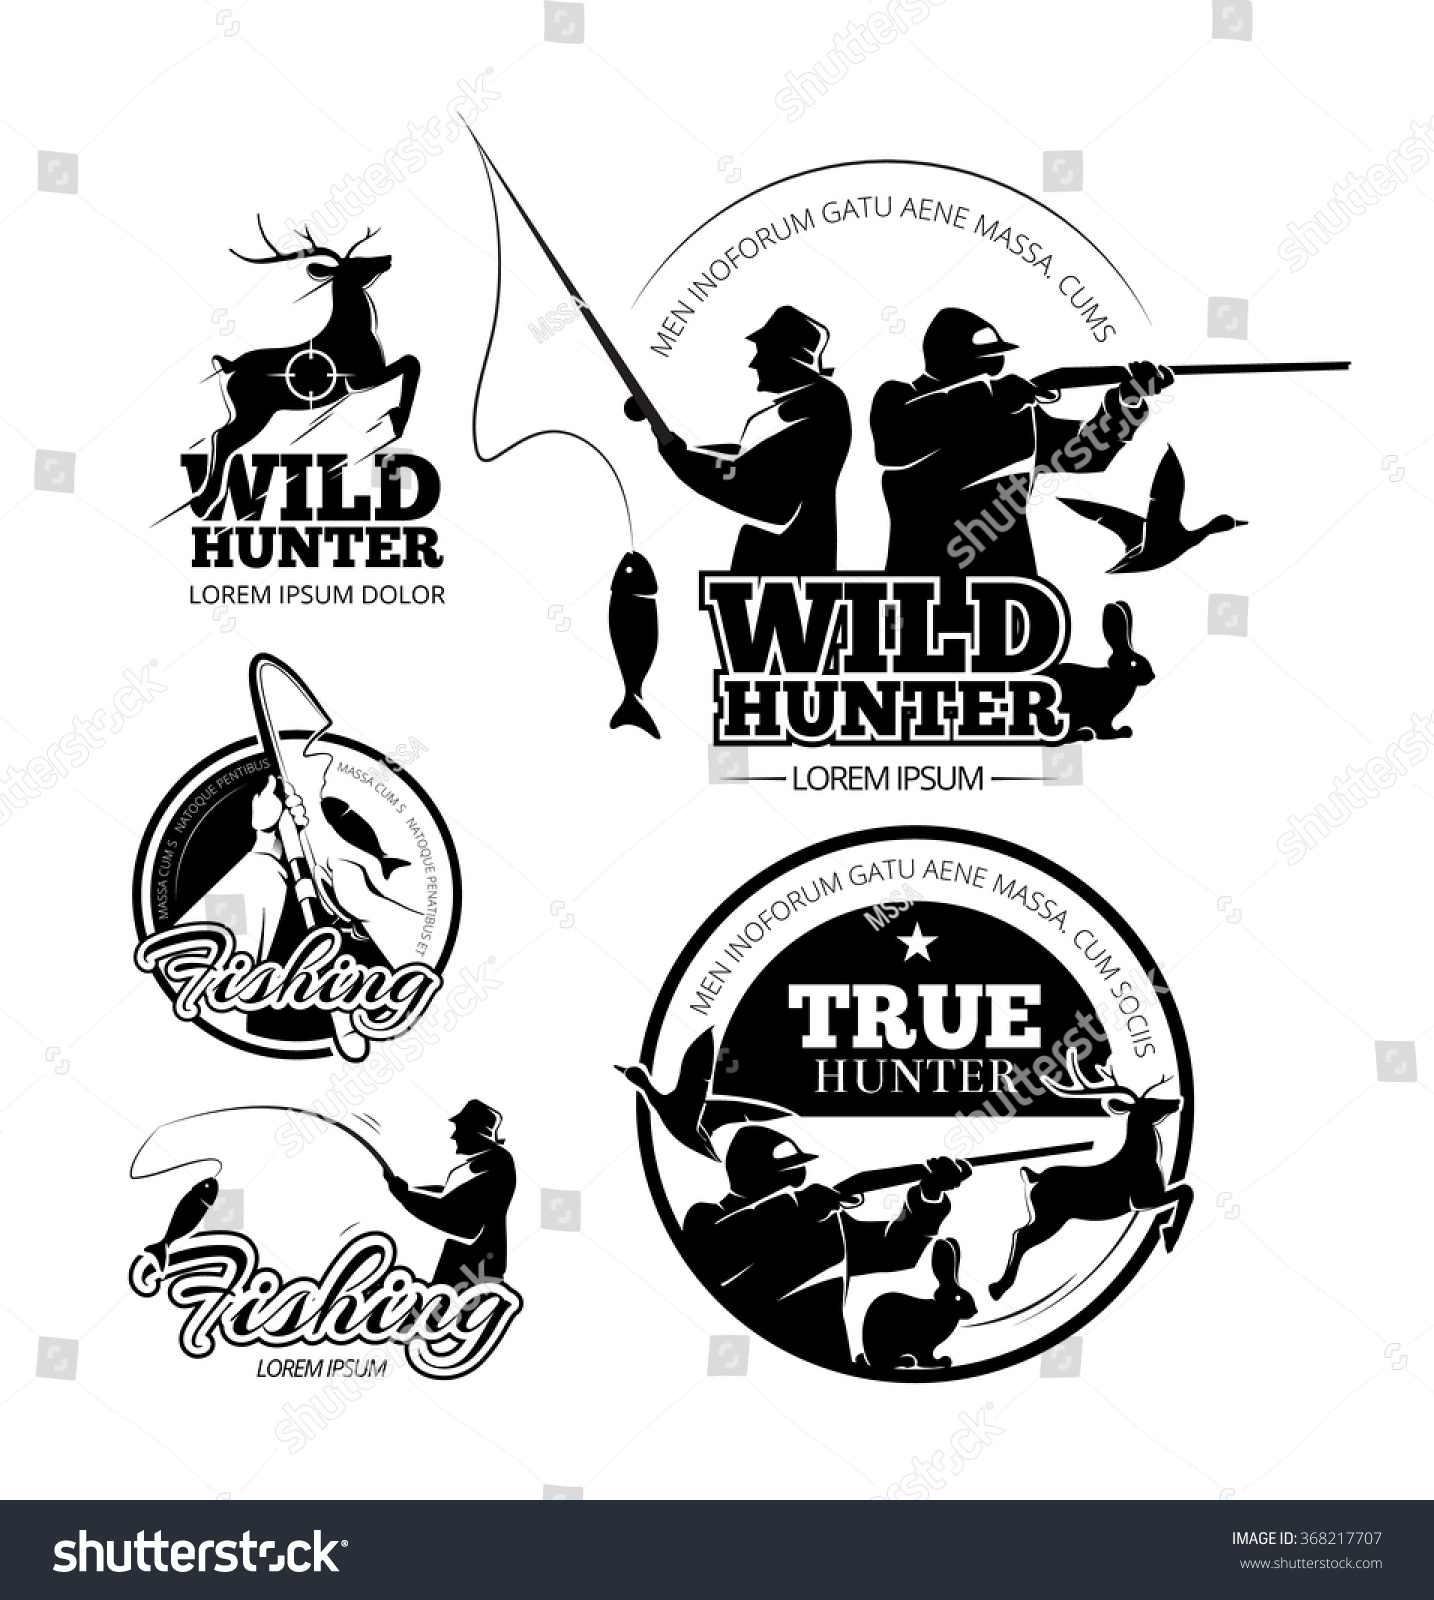 Download Vintage Hunting Fishing Vector Labels Logos Stock Vector 368217707 - Shutterstock